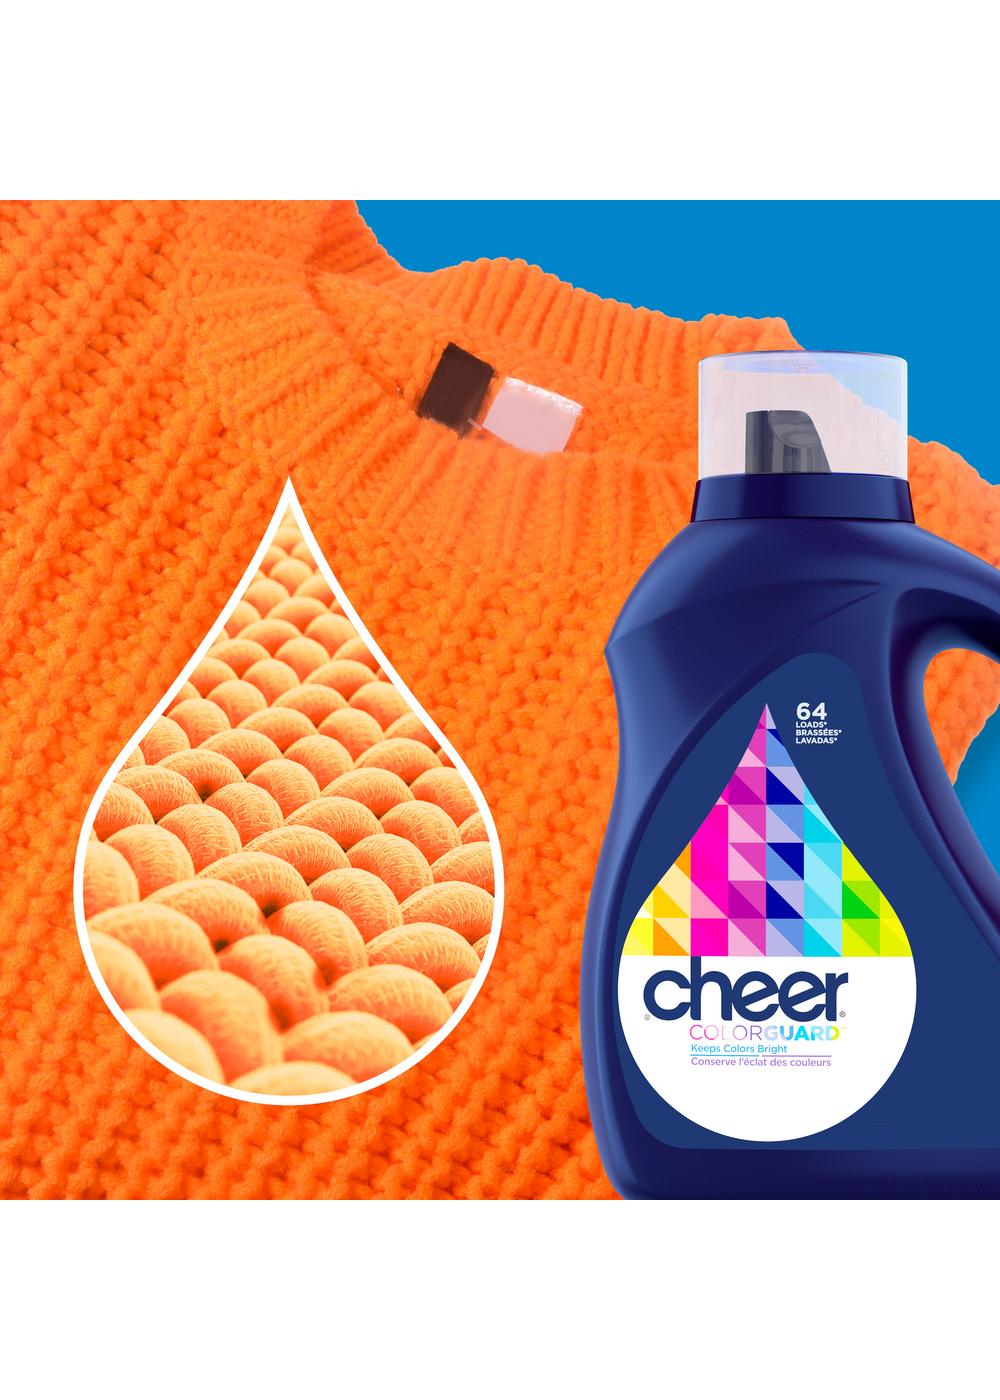 Cheer Colorguard HE Liquid Laundry Detergent, 64 Loads; image 2 of 7